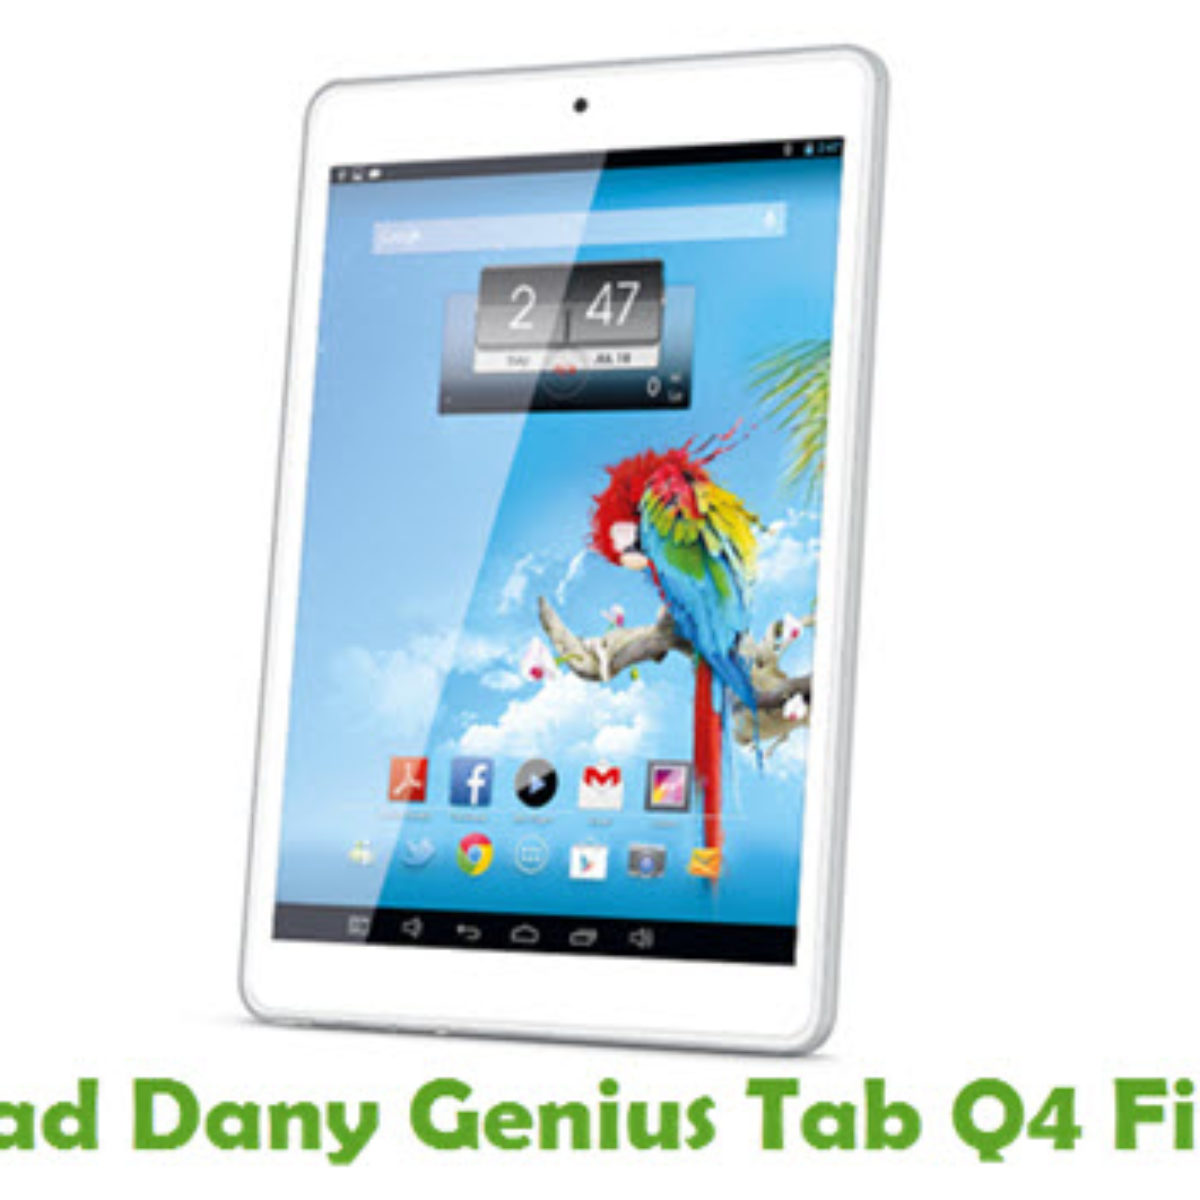 download dany genius tablet driver